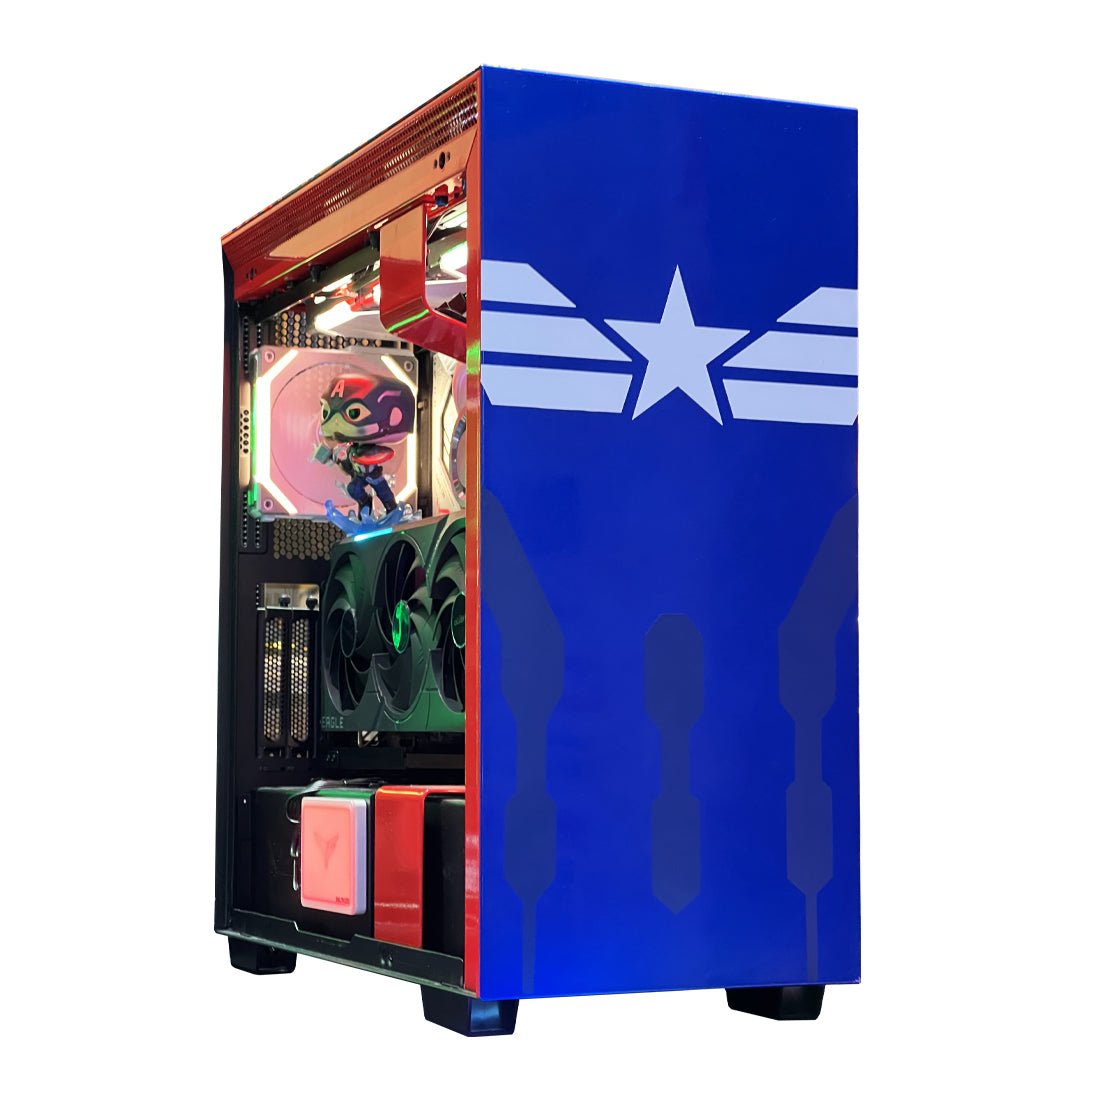 Captain America Build | كمبيوتر كابتن أميريكا - Store 974 | ستور ٩٧٤